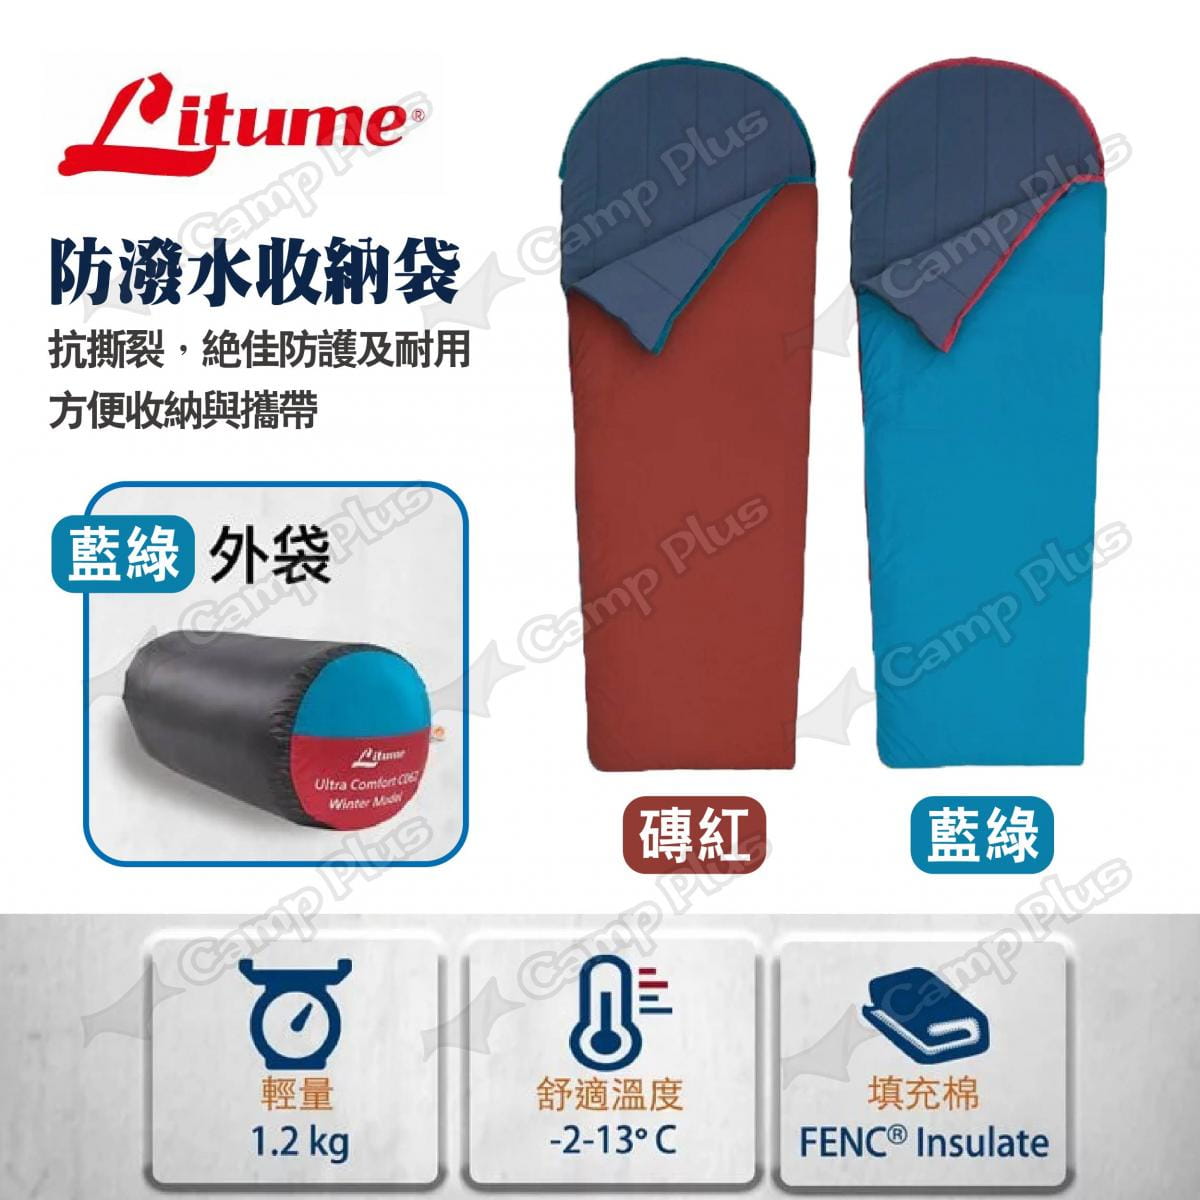 【LITUME】意都美 FENC® Insulate 科技棉睡袋 C062磚紅 悠遊戶外 2